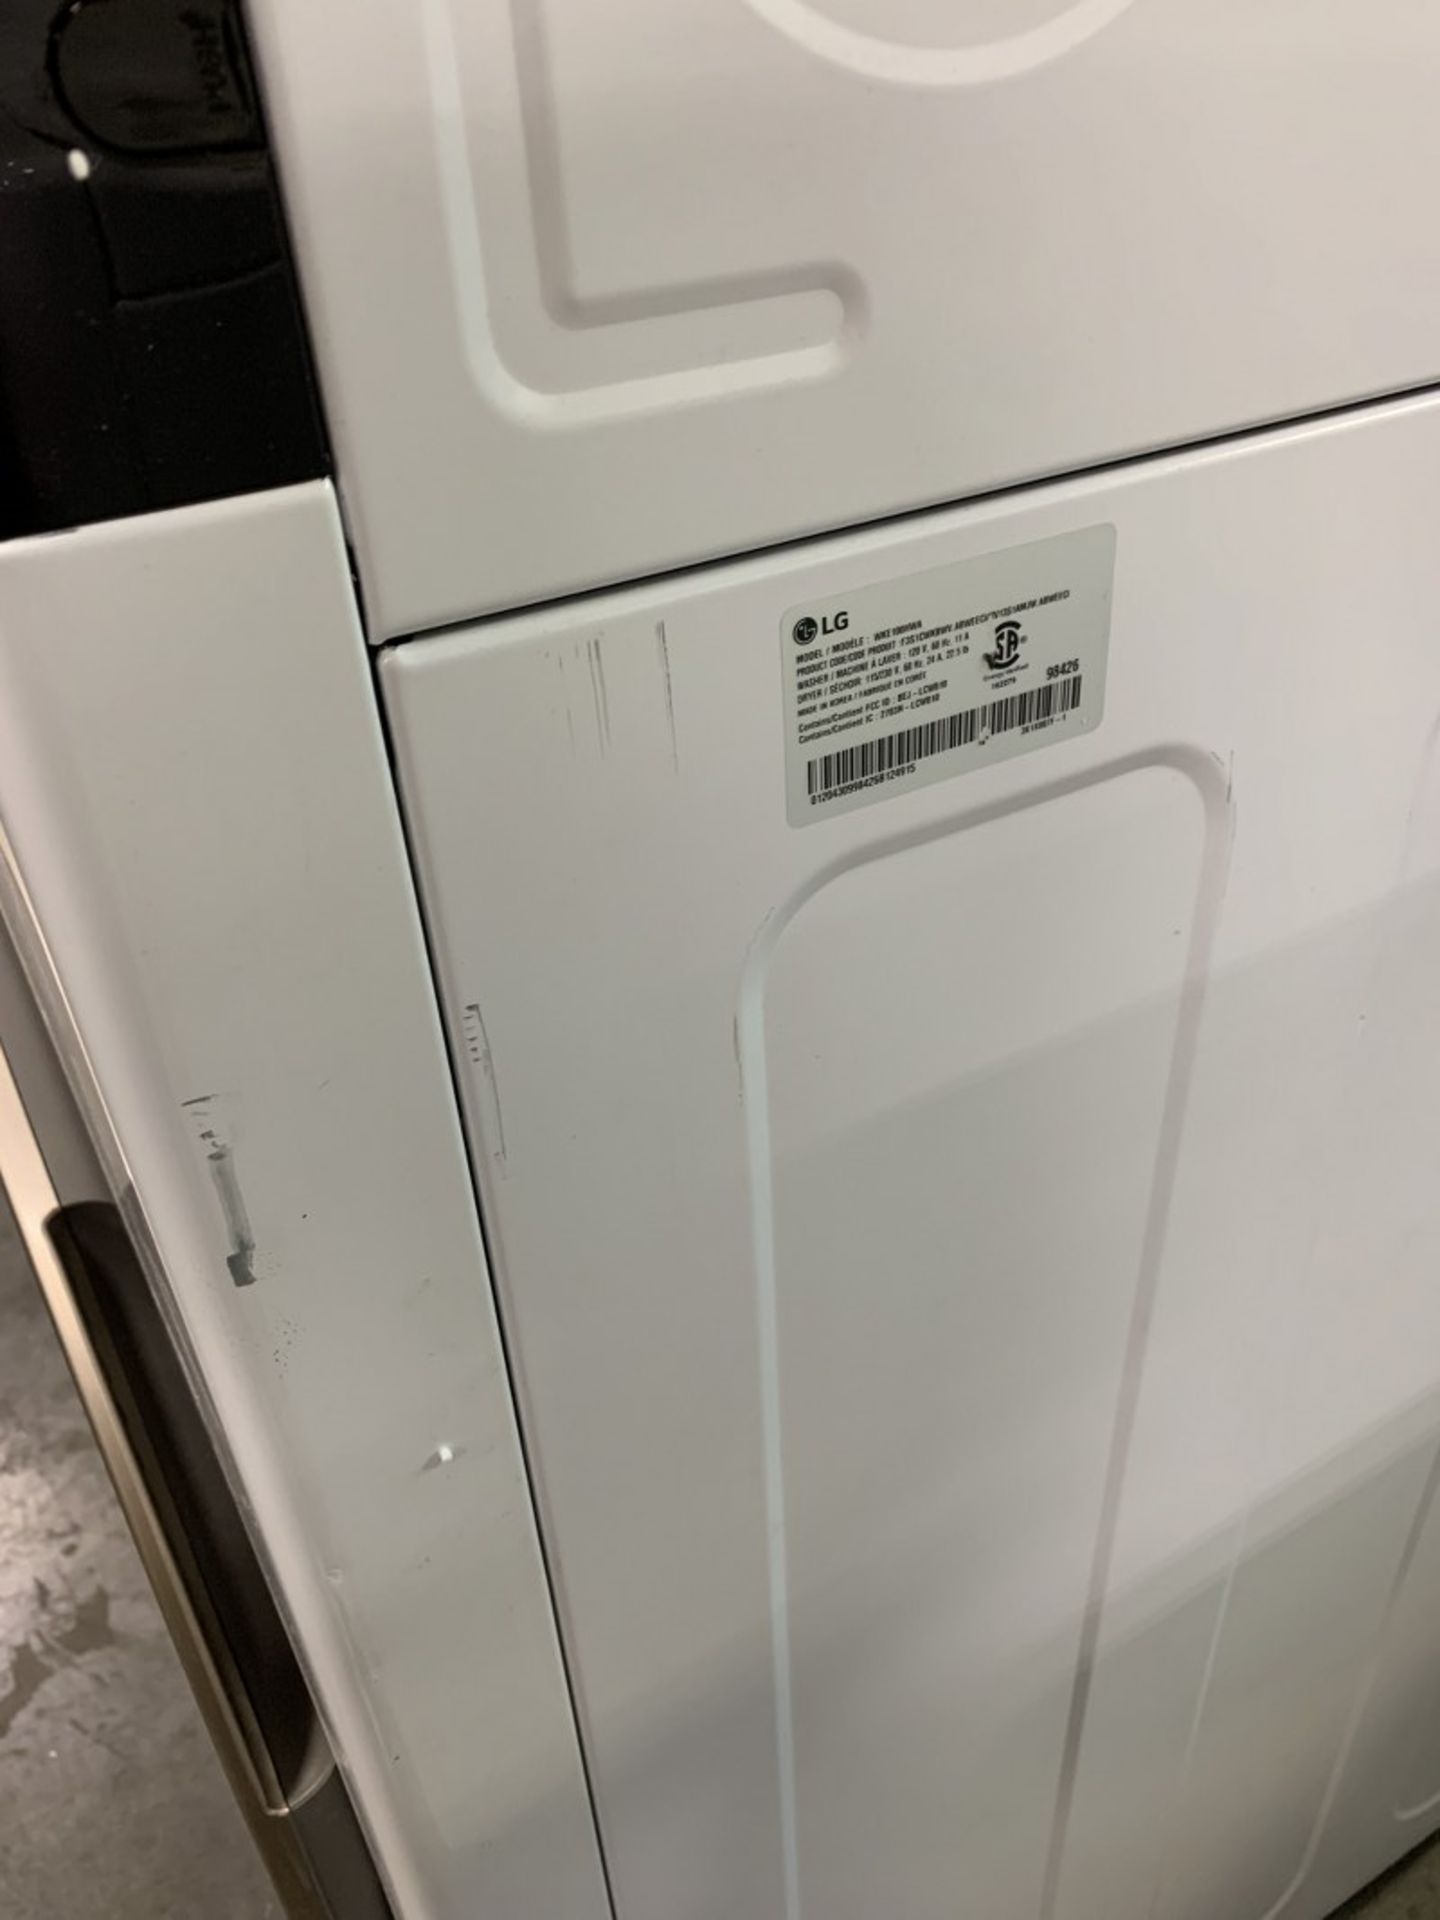 LG - 27 inch Width Washer & Dryer Set, WashTower, AI DD, White colour Washer: 6 Wash Cycles, 1300 - Image 5 of 7